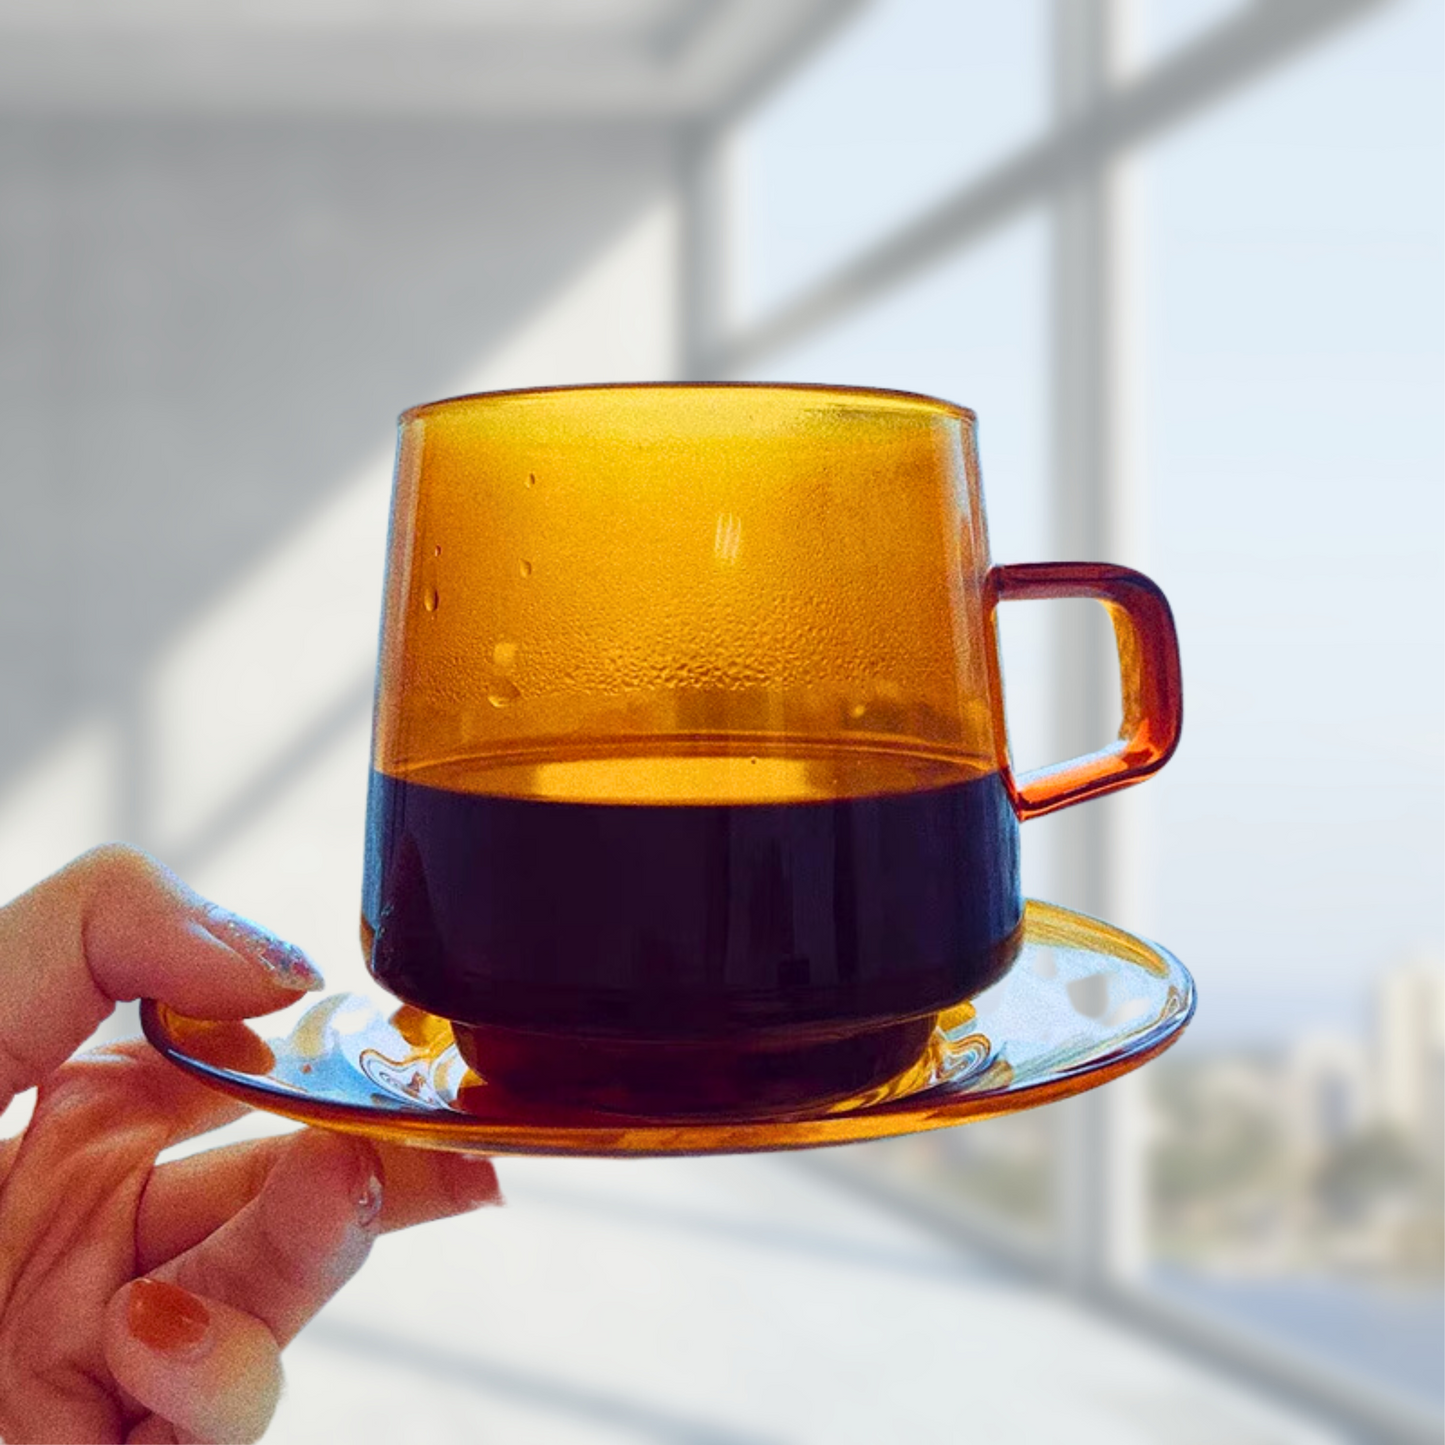 Handblown Amber Glass Cup and Saucer Set